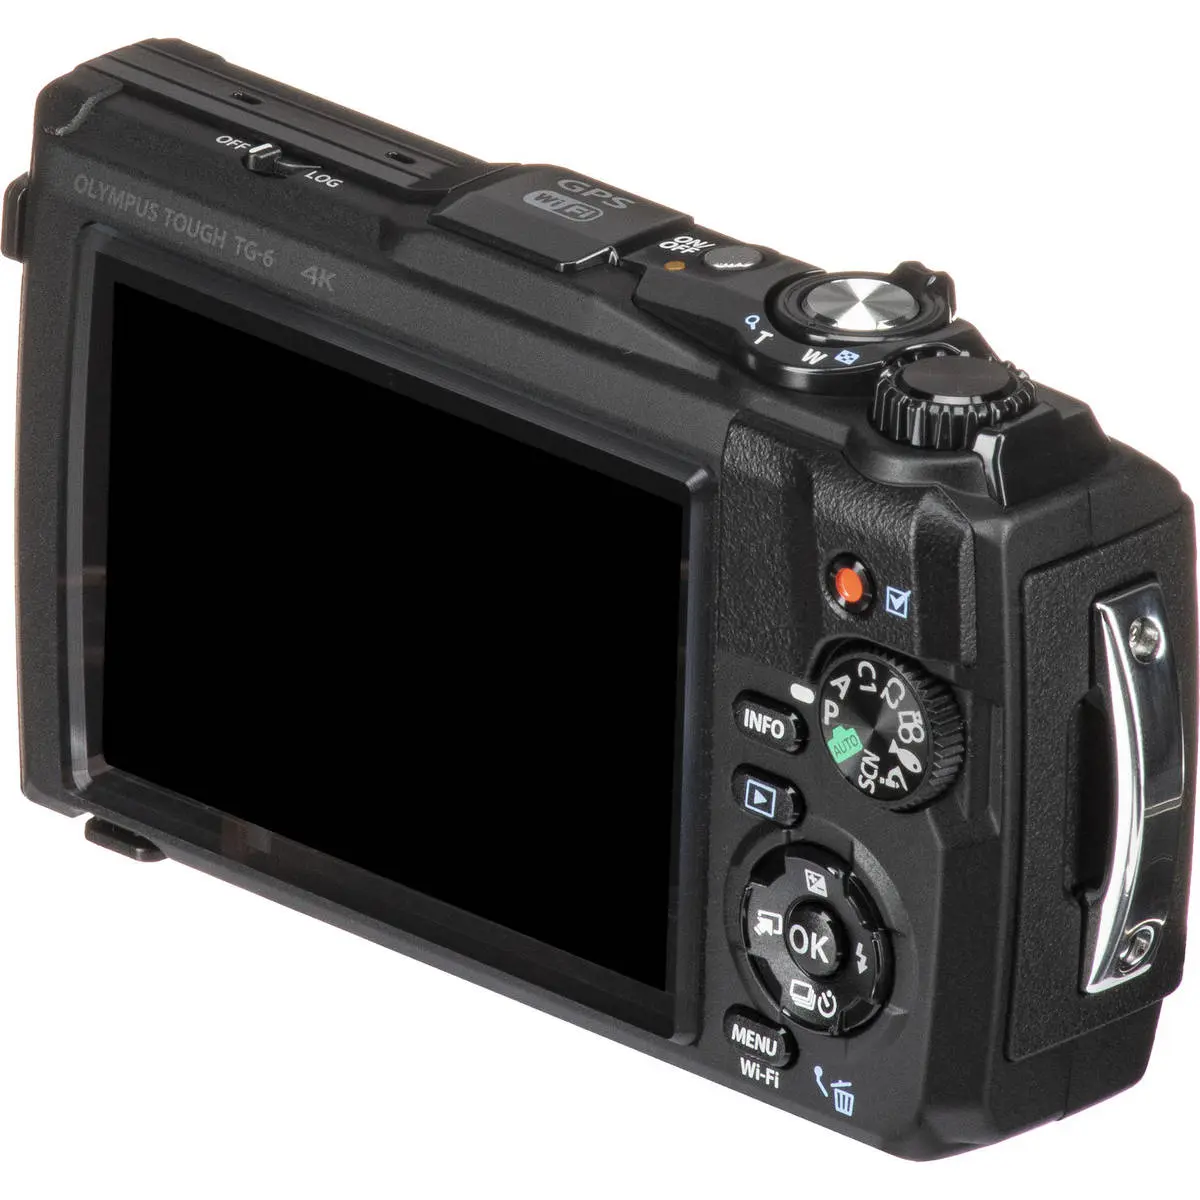 10. Olympus Tough TG-6 Black 15m Waterproof 12MP F2.0 Camera